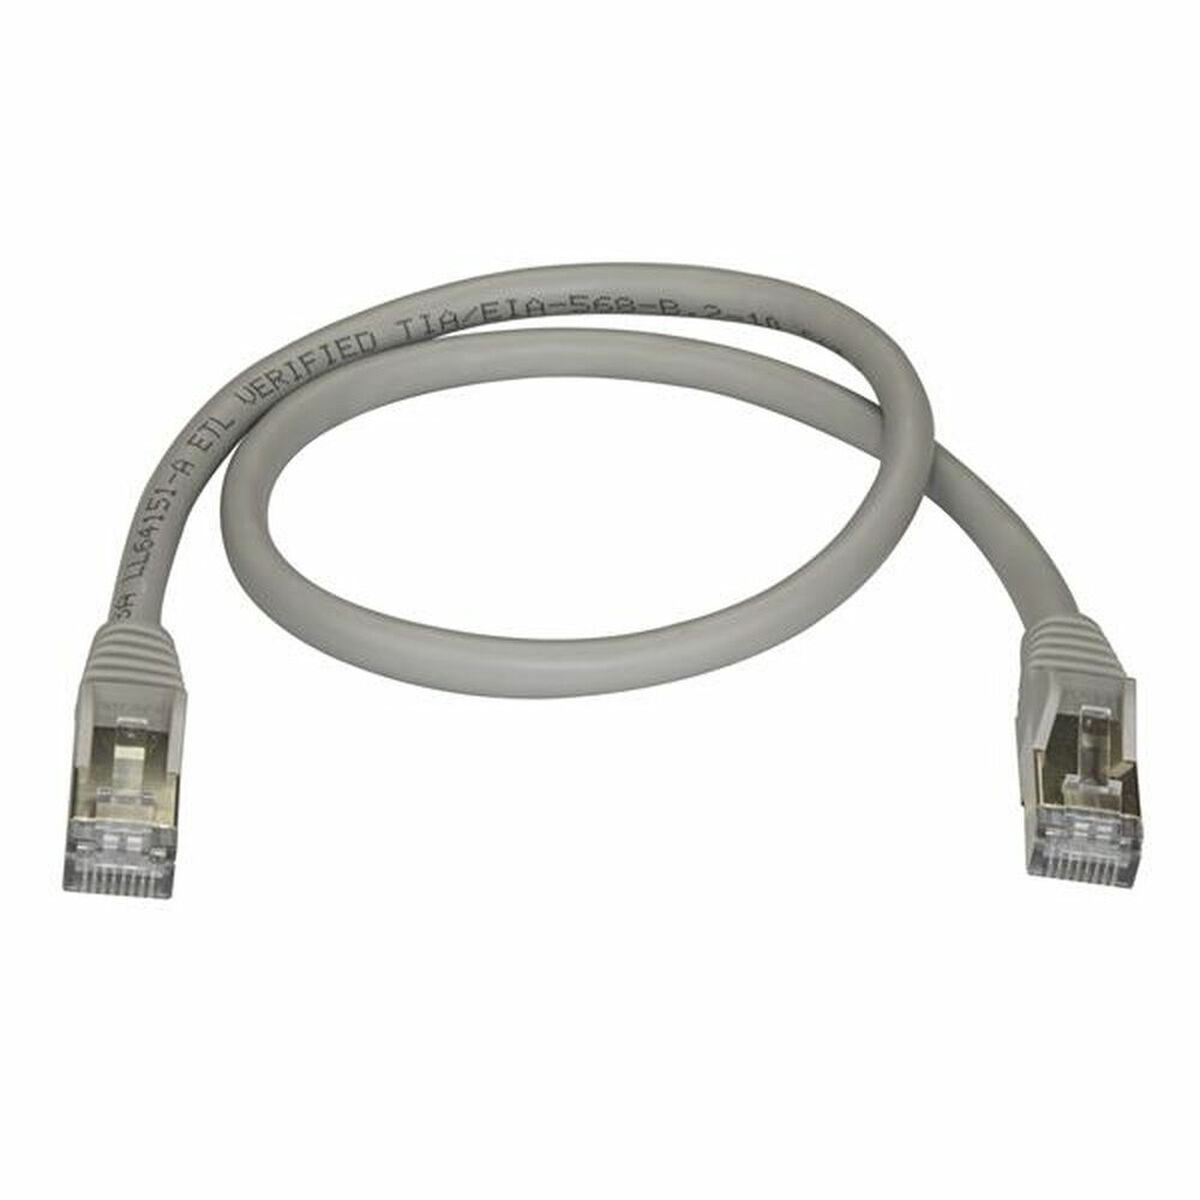 UTP Category 6 Rigid Network Cable Startech 6ASPAT50CMGR 50 cm